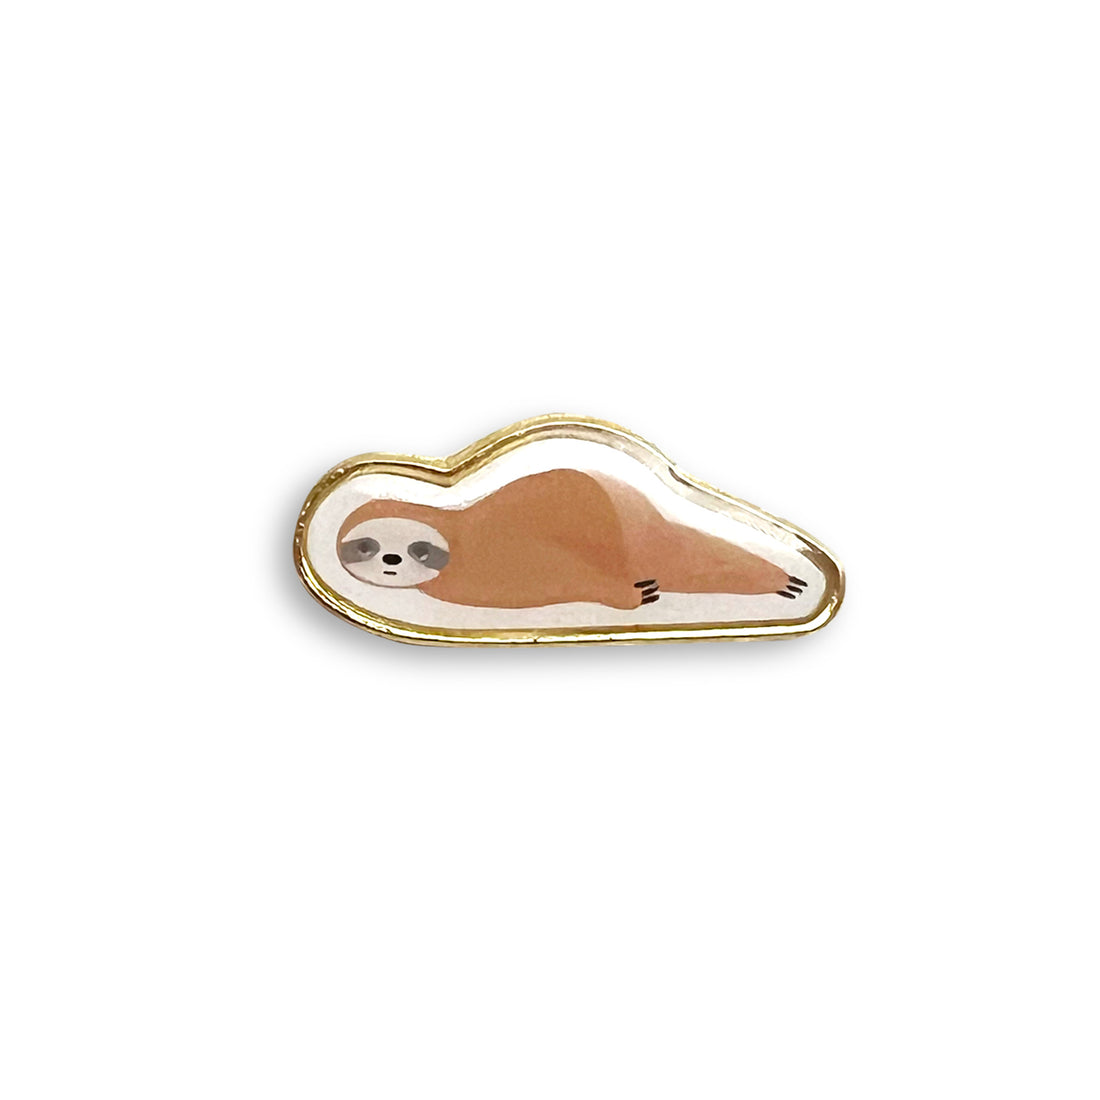 Sloth lapel pin by I&